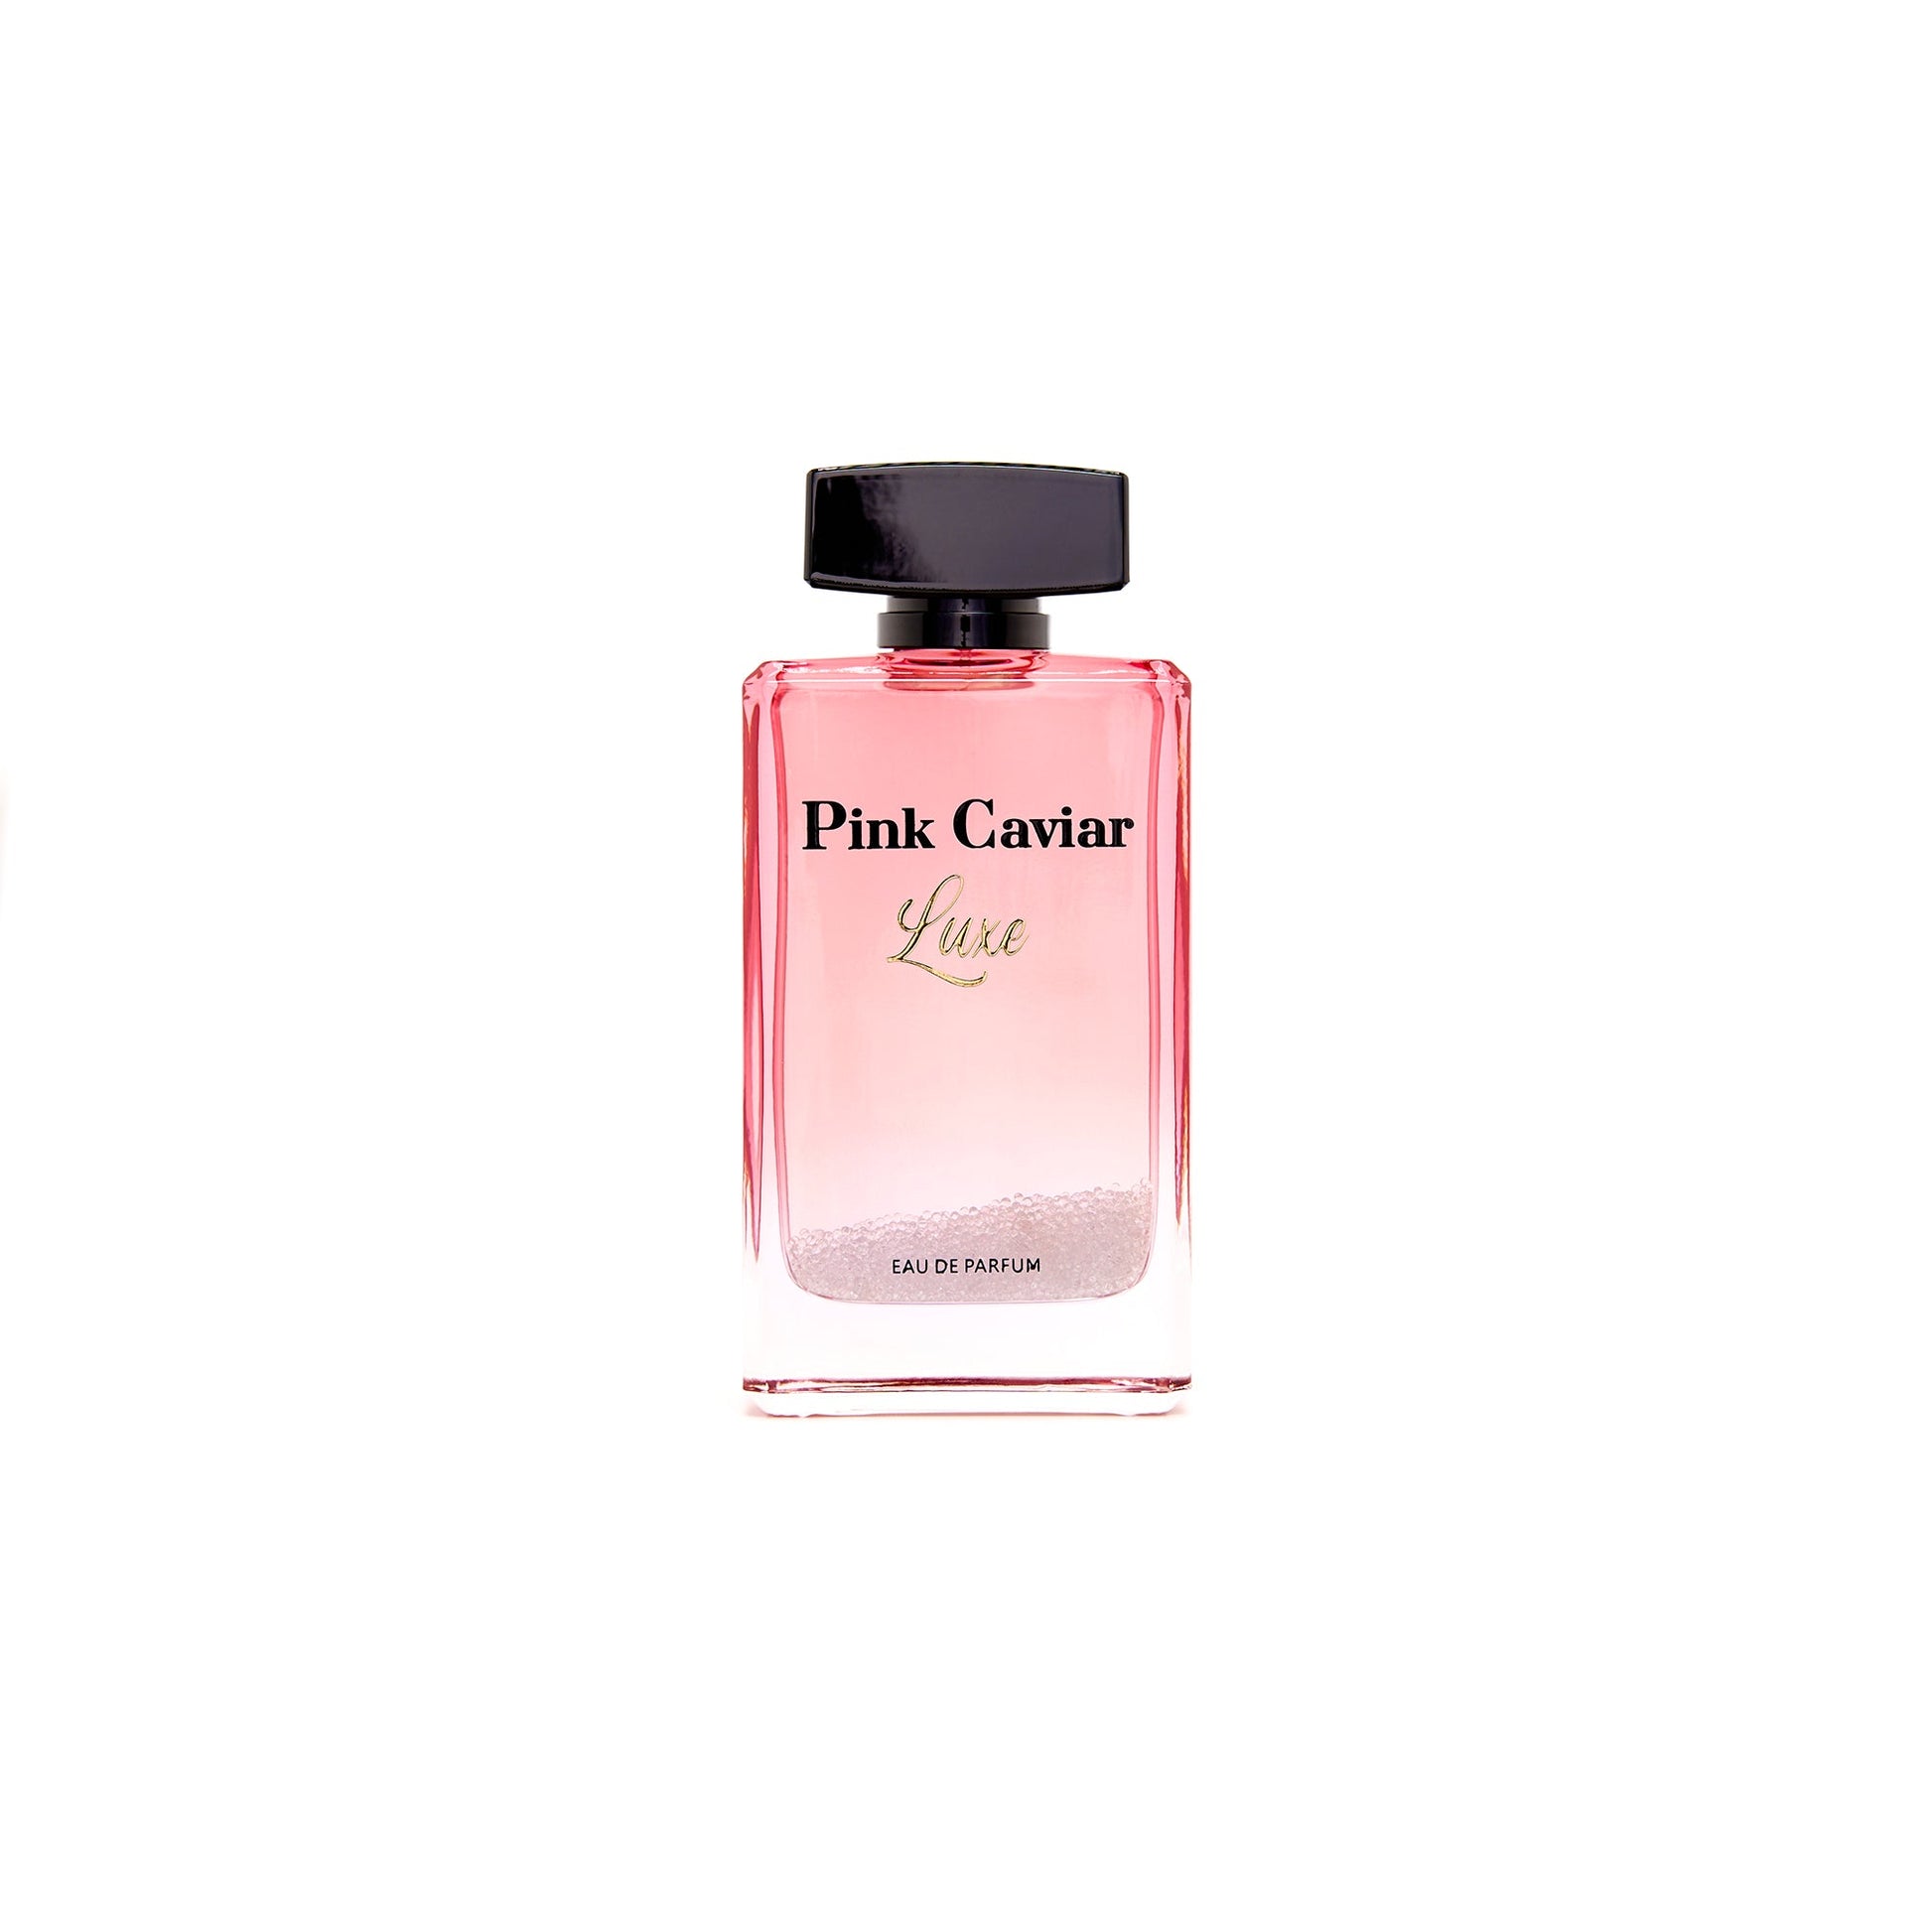 Pink Caviar Luxe Eau de Parfum Spray for Women by Syren, Product image 2